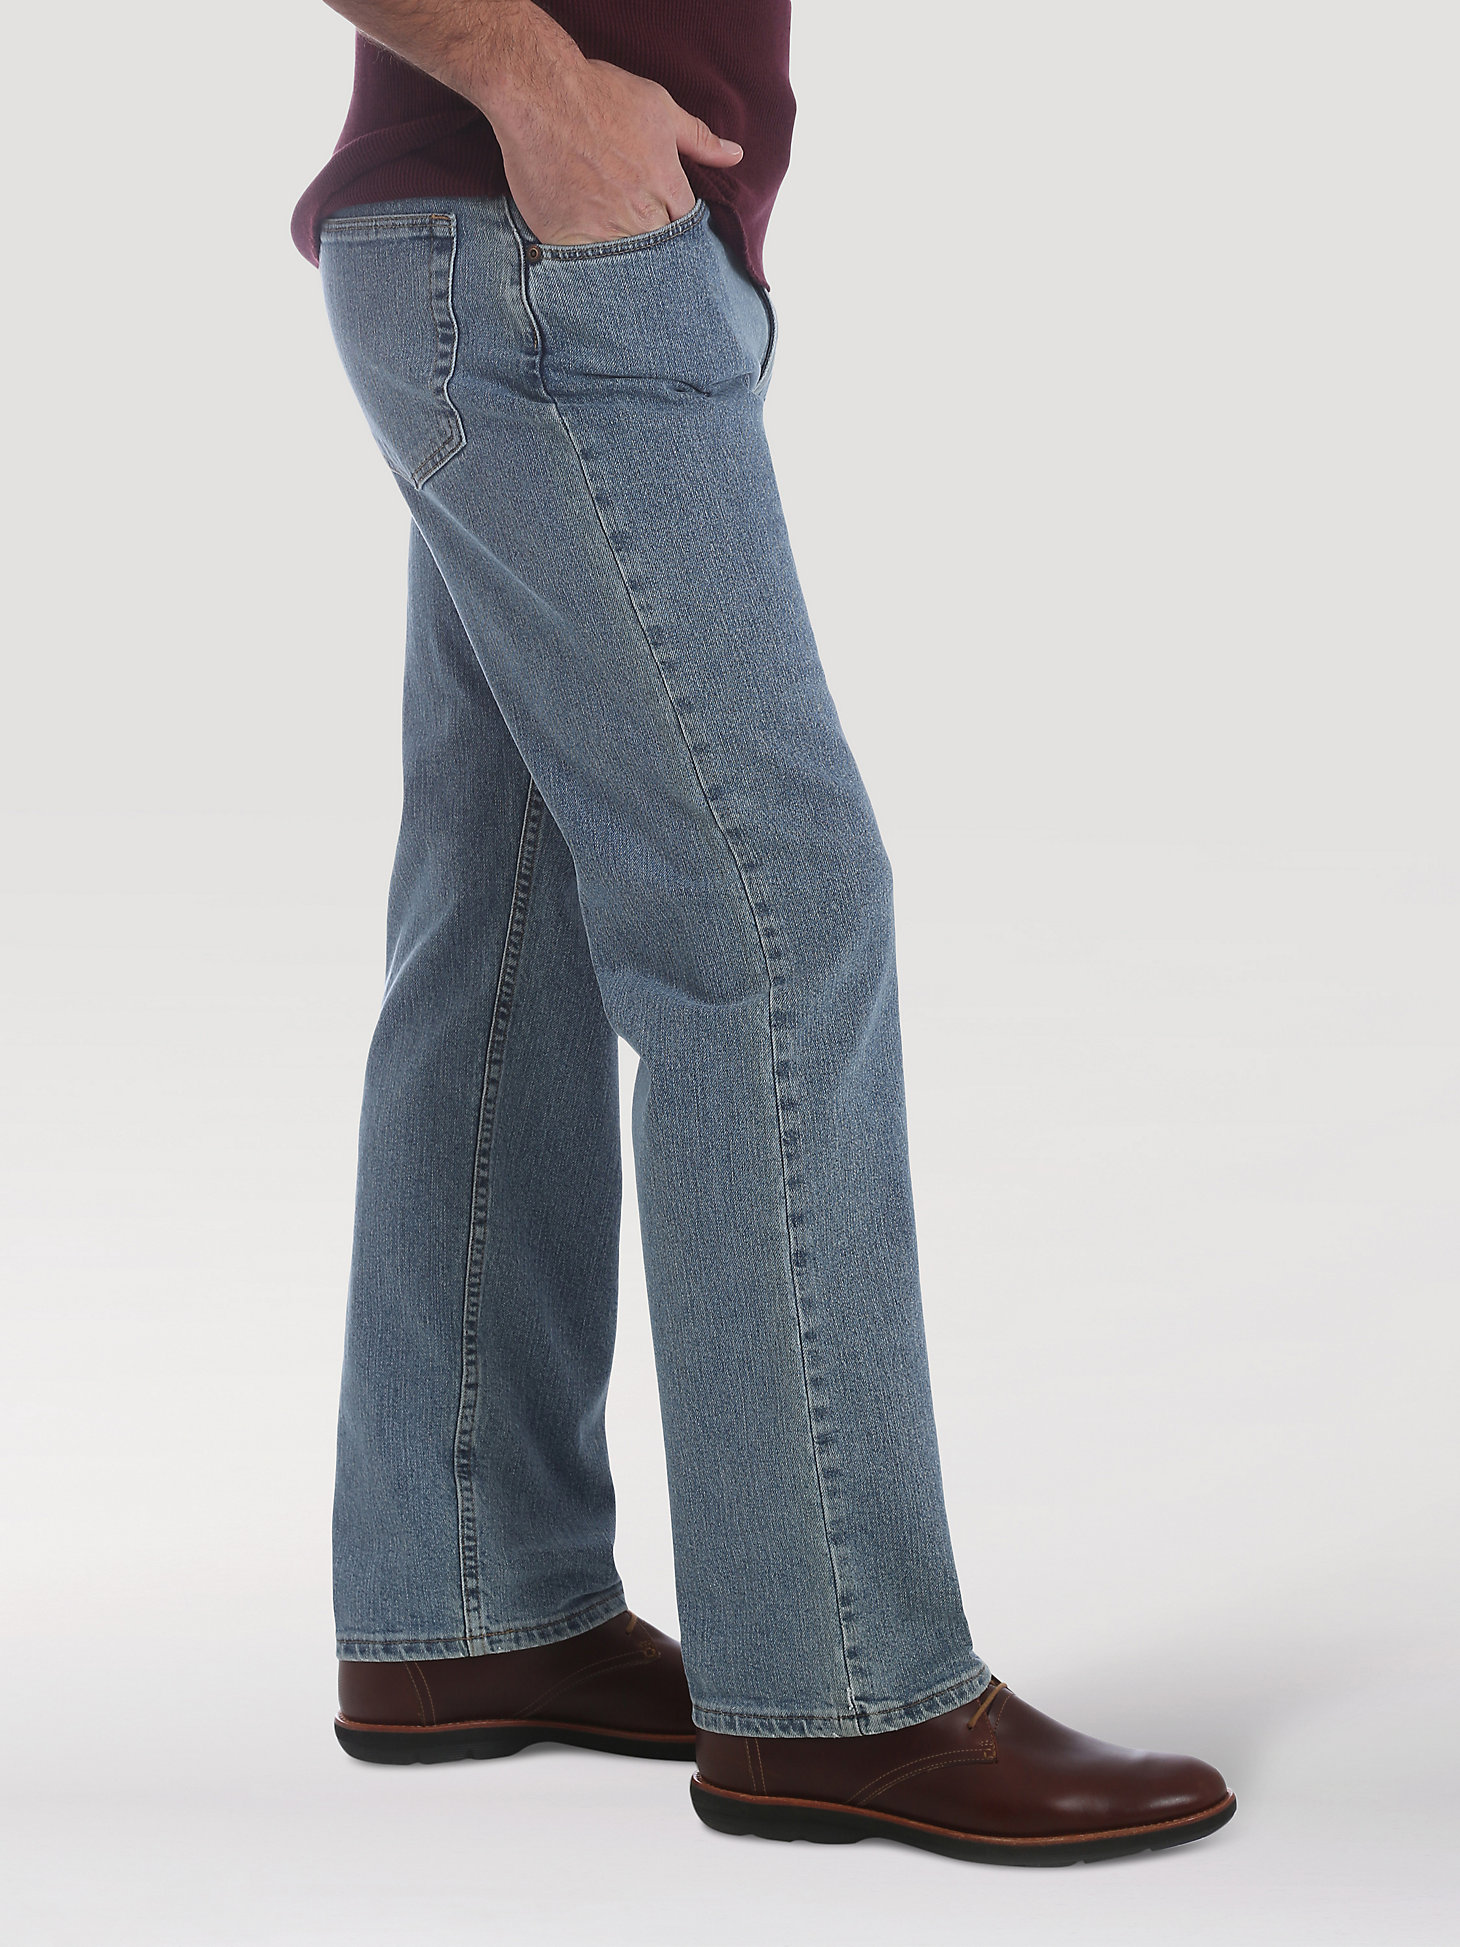 Wrangler® Five Star Premium Performance Series Regular Fit Jean in Light Wash alternative view 2